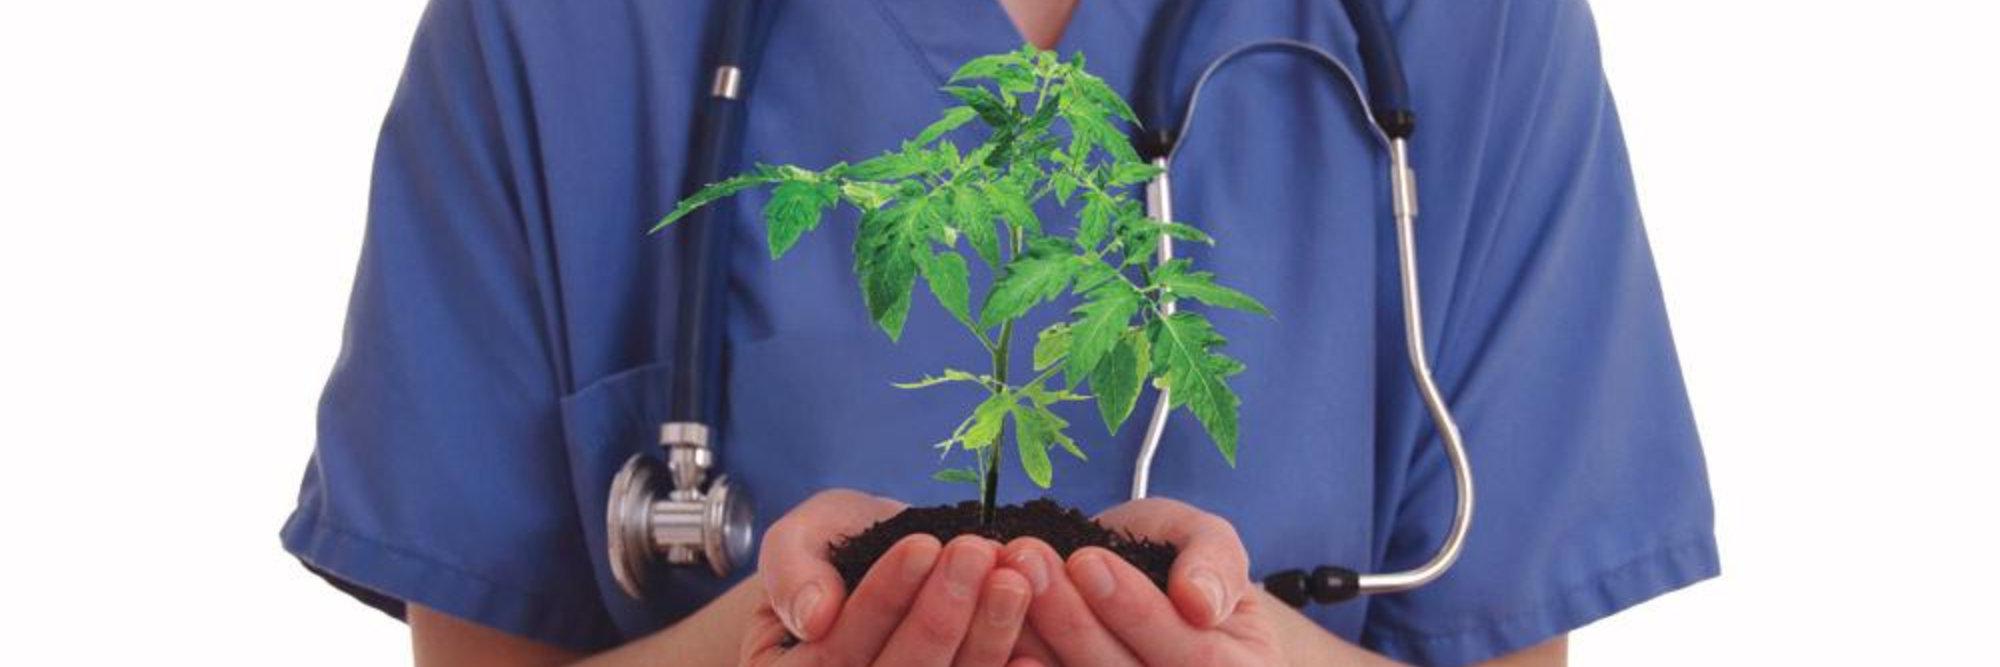 hospital worker holding plant